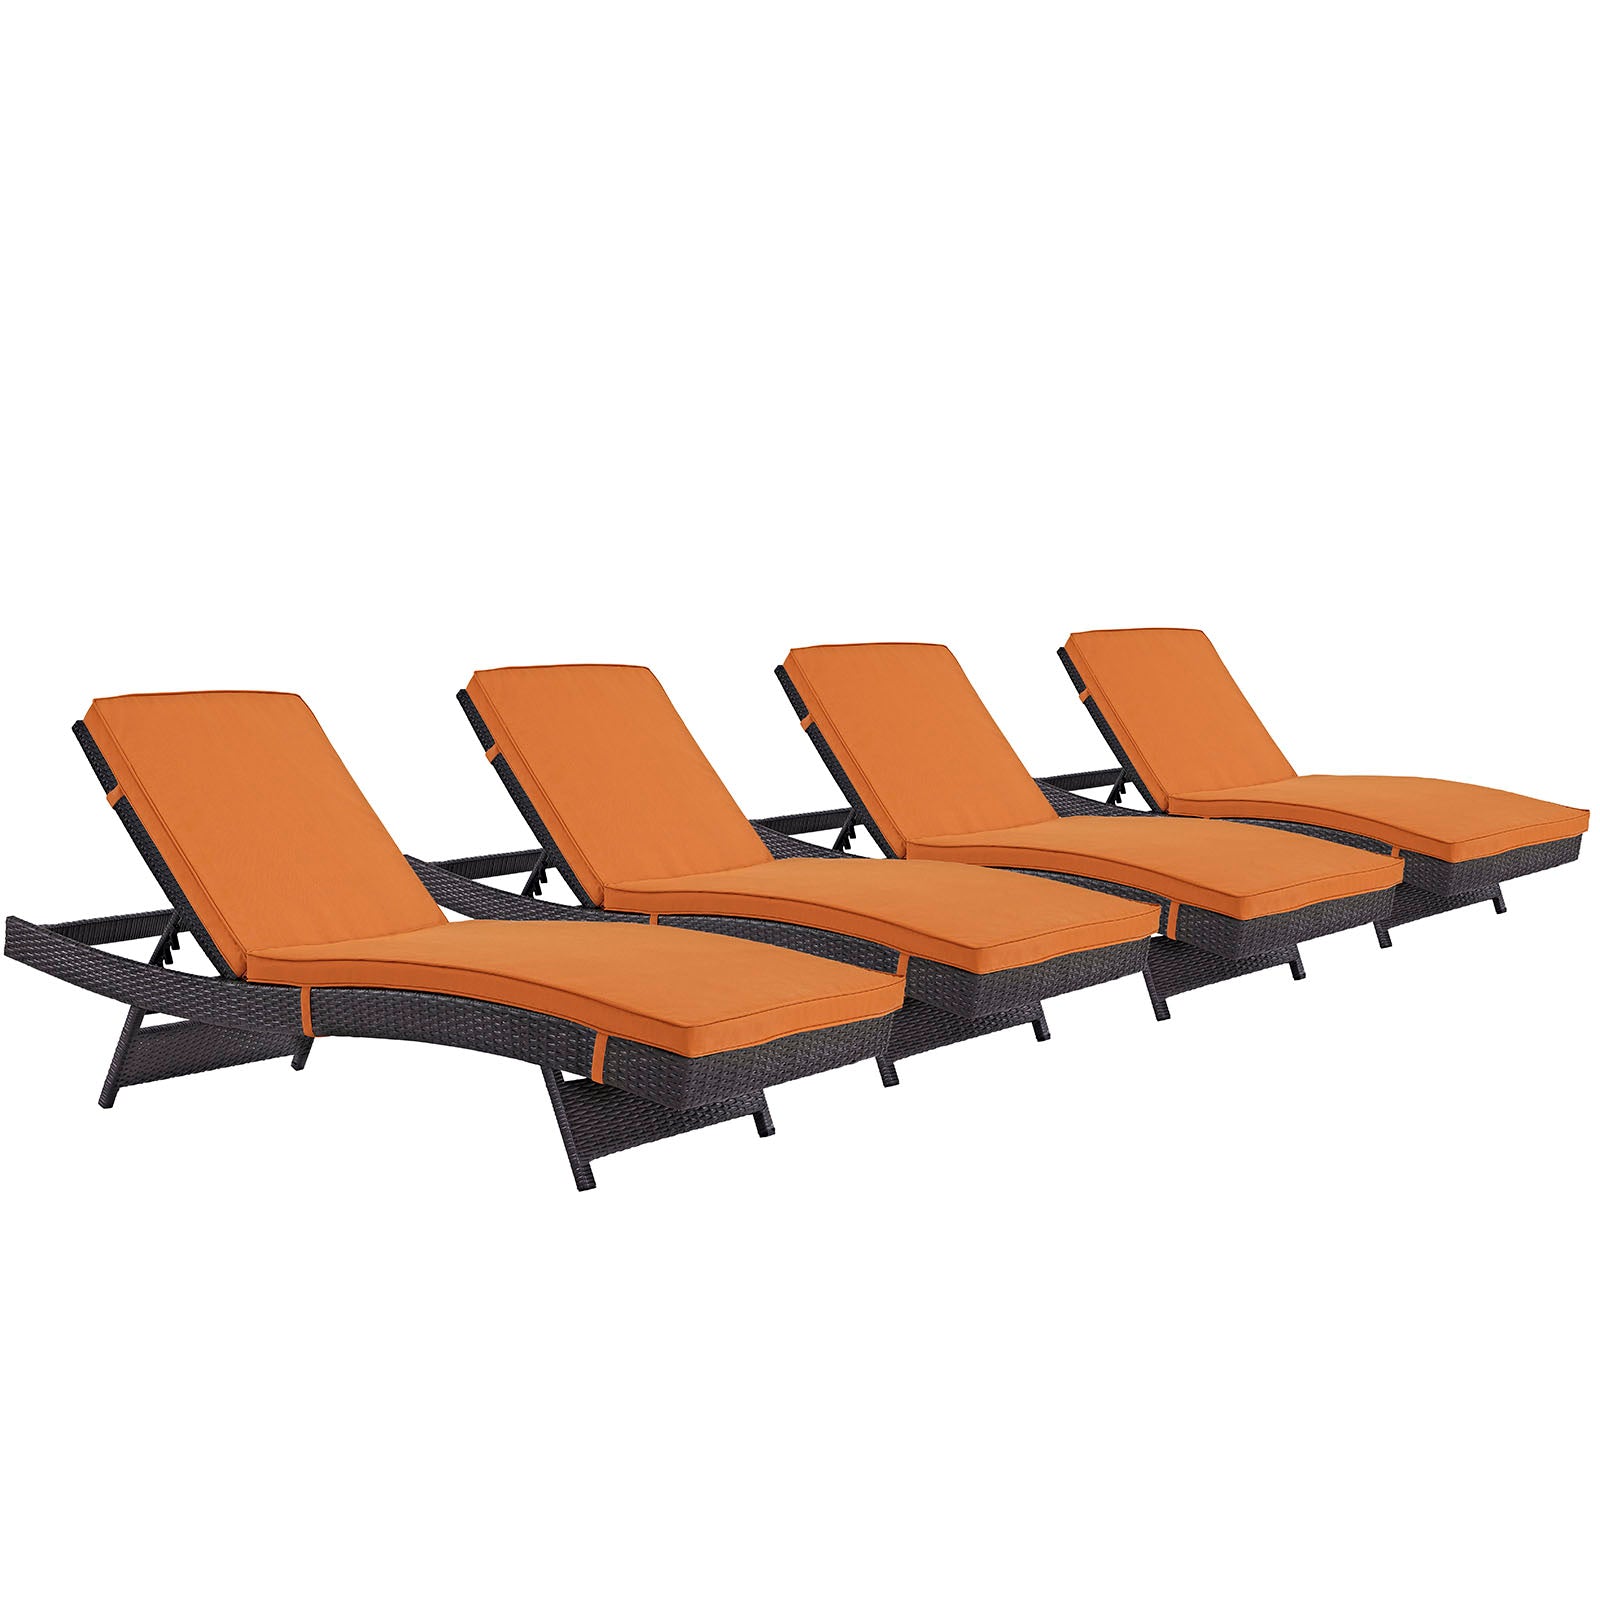 Modway Outdoor Loungers - Convene Chaise Outdoor Patio Set of 4 Espresso Orange